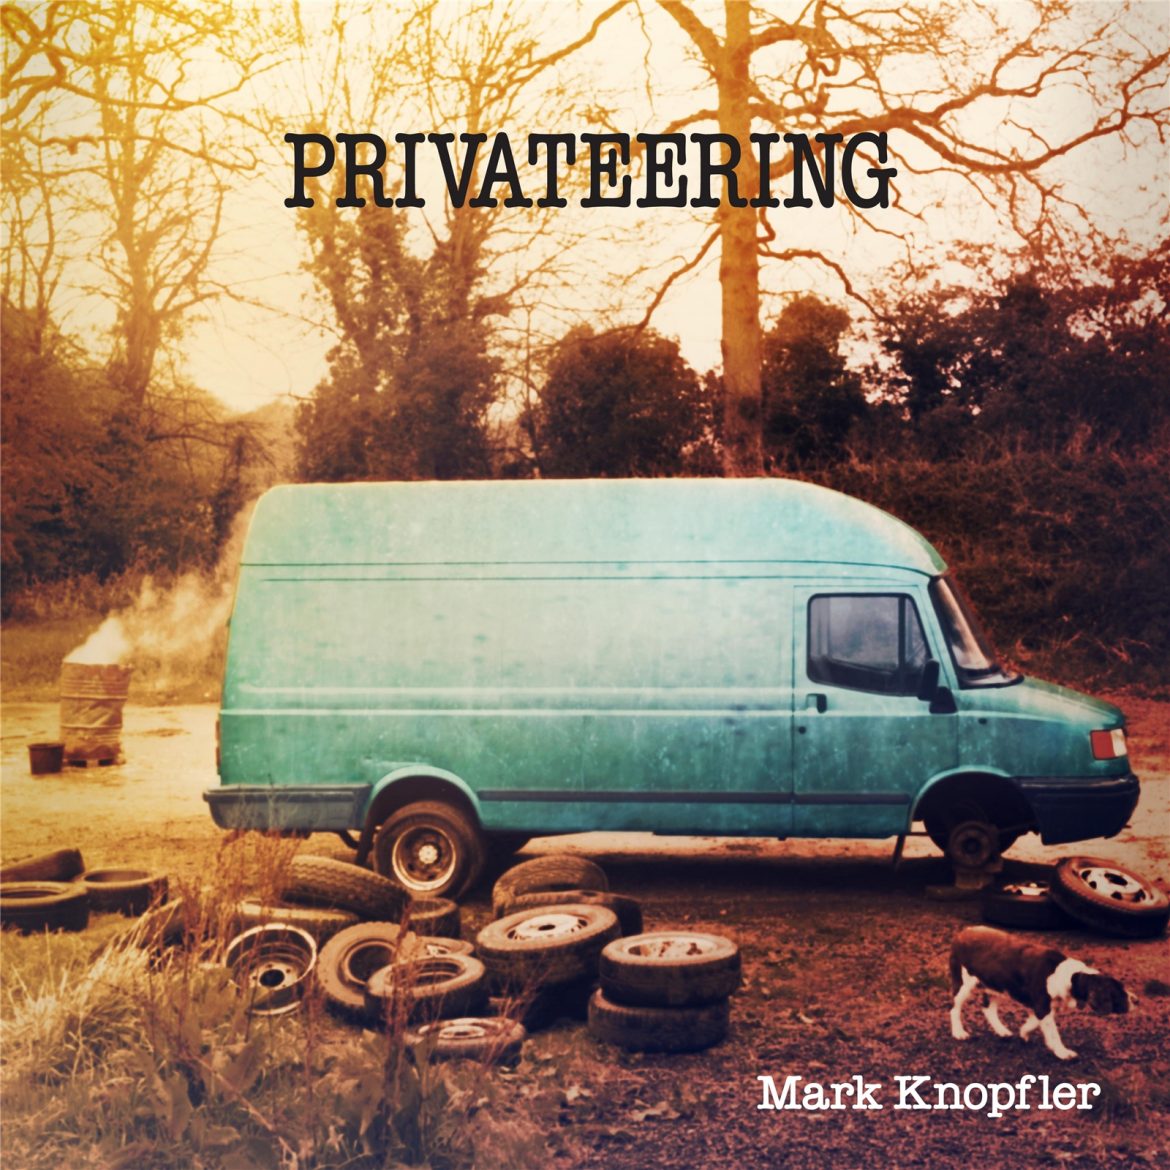 Mark Knopfler "Privateering" nuevo disco, gira eueopea y española 2013